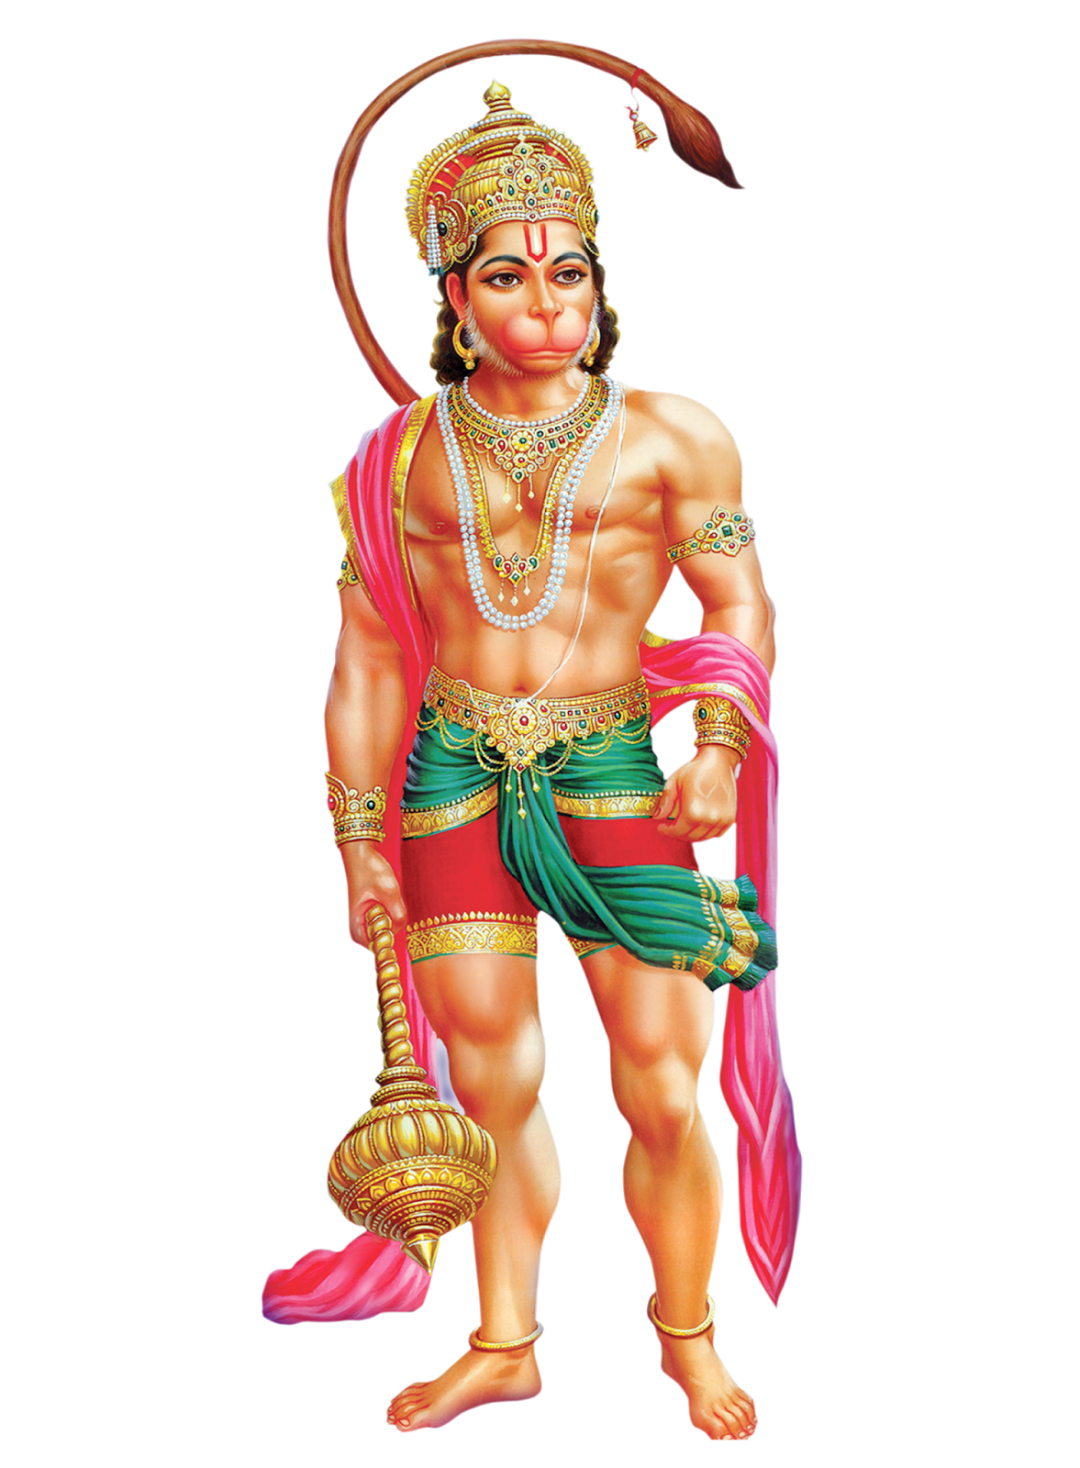 130+ HD Wallpapers of Lord Hanuman